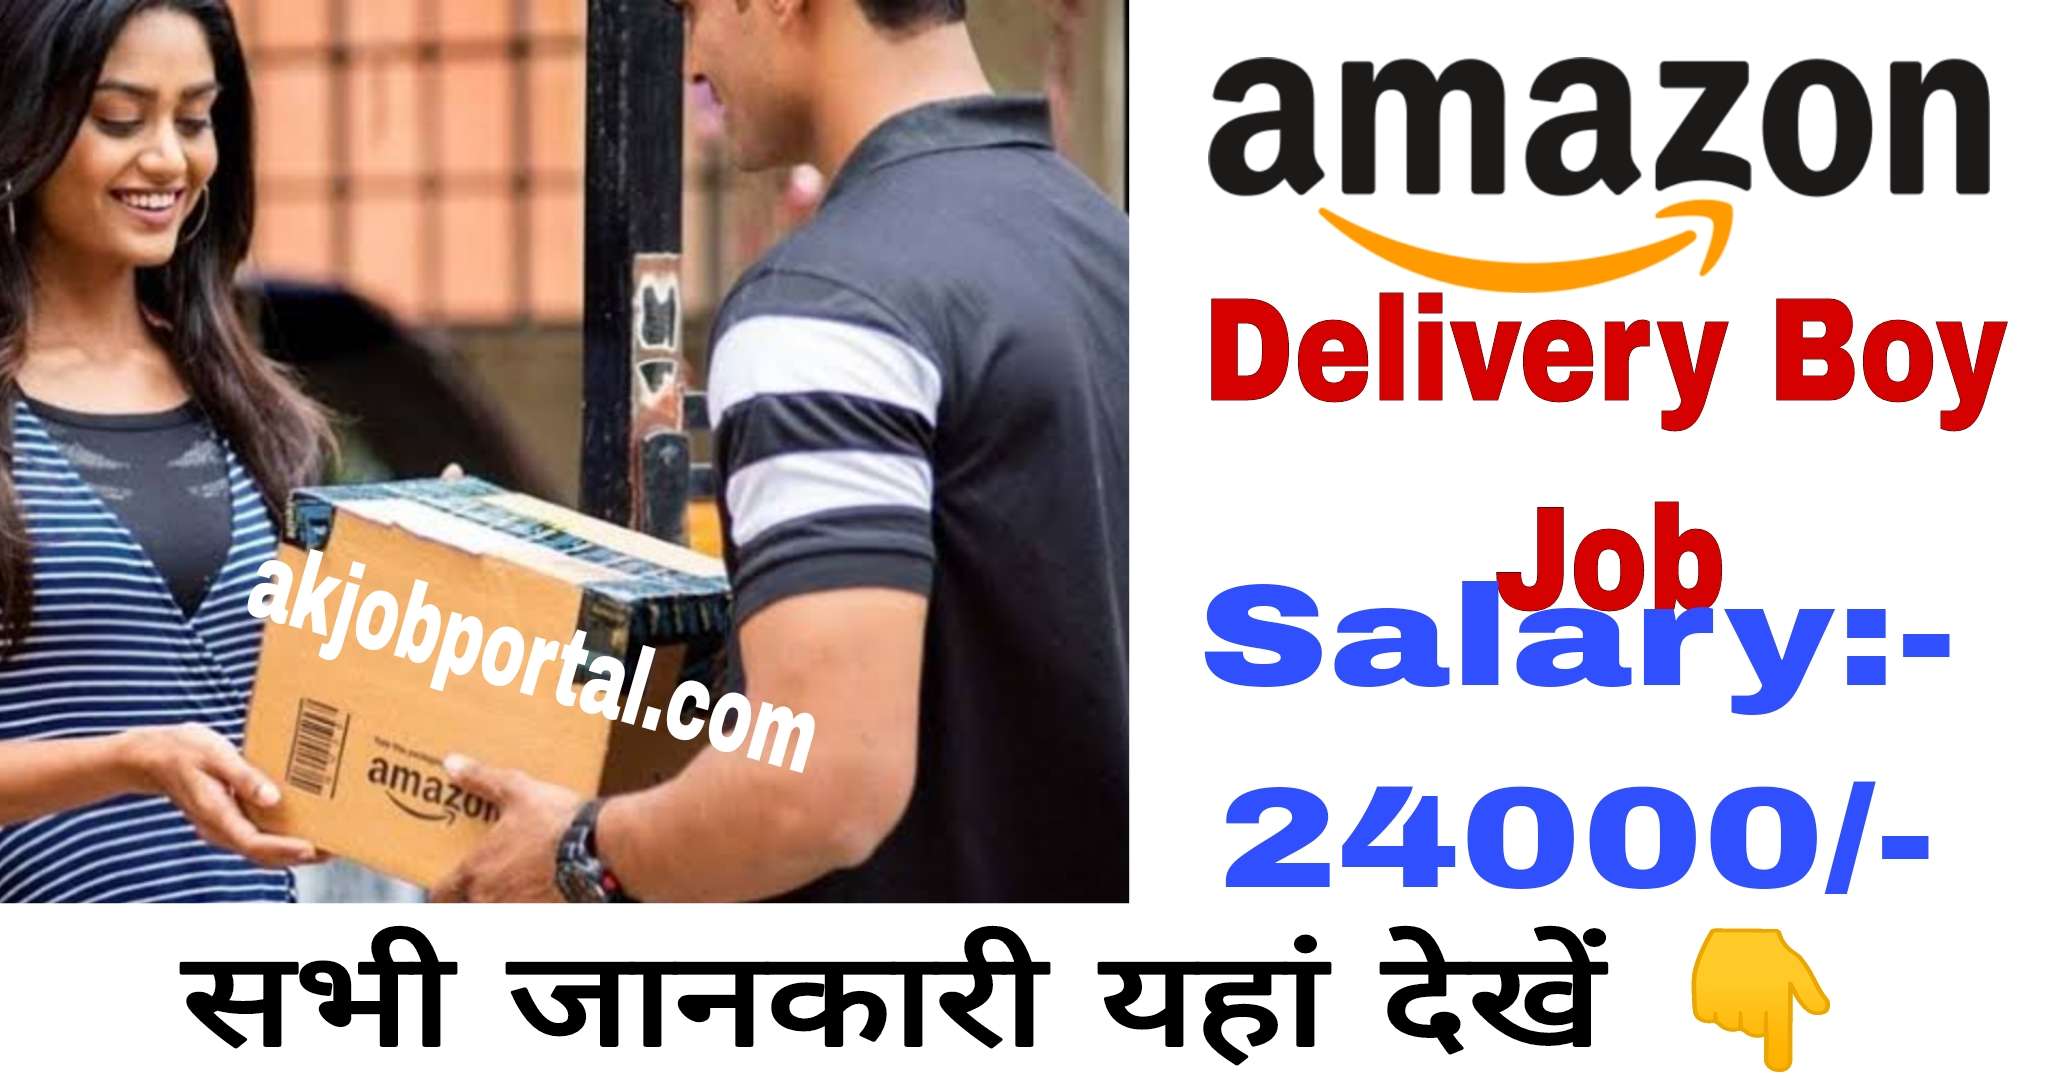 Amazon Delivery Boy Job